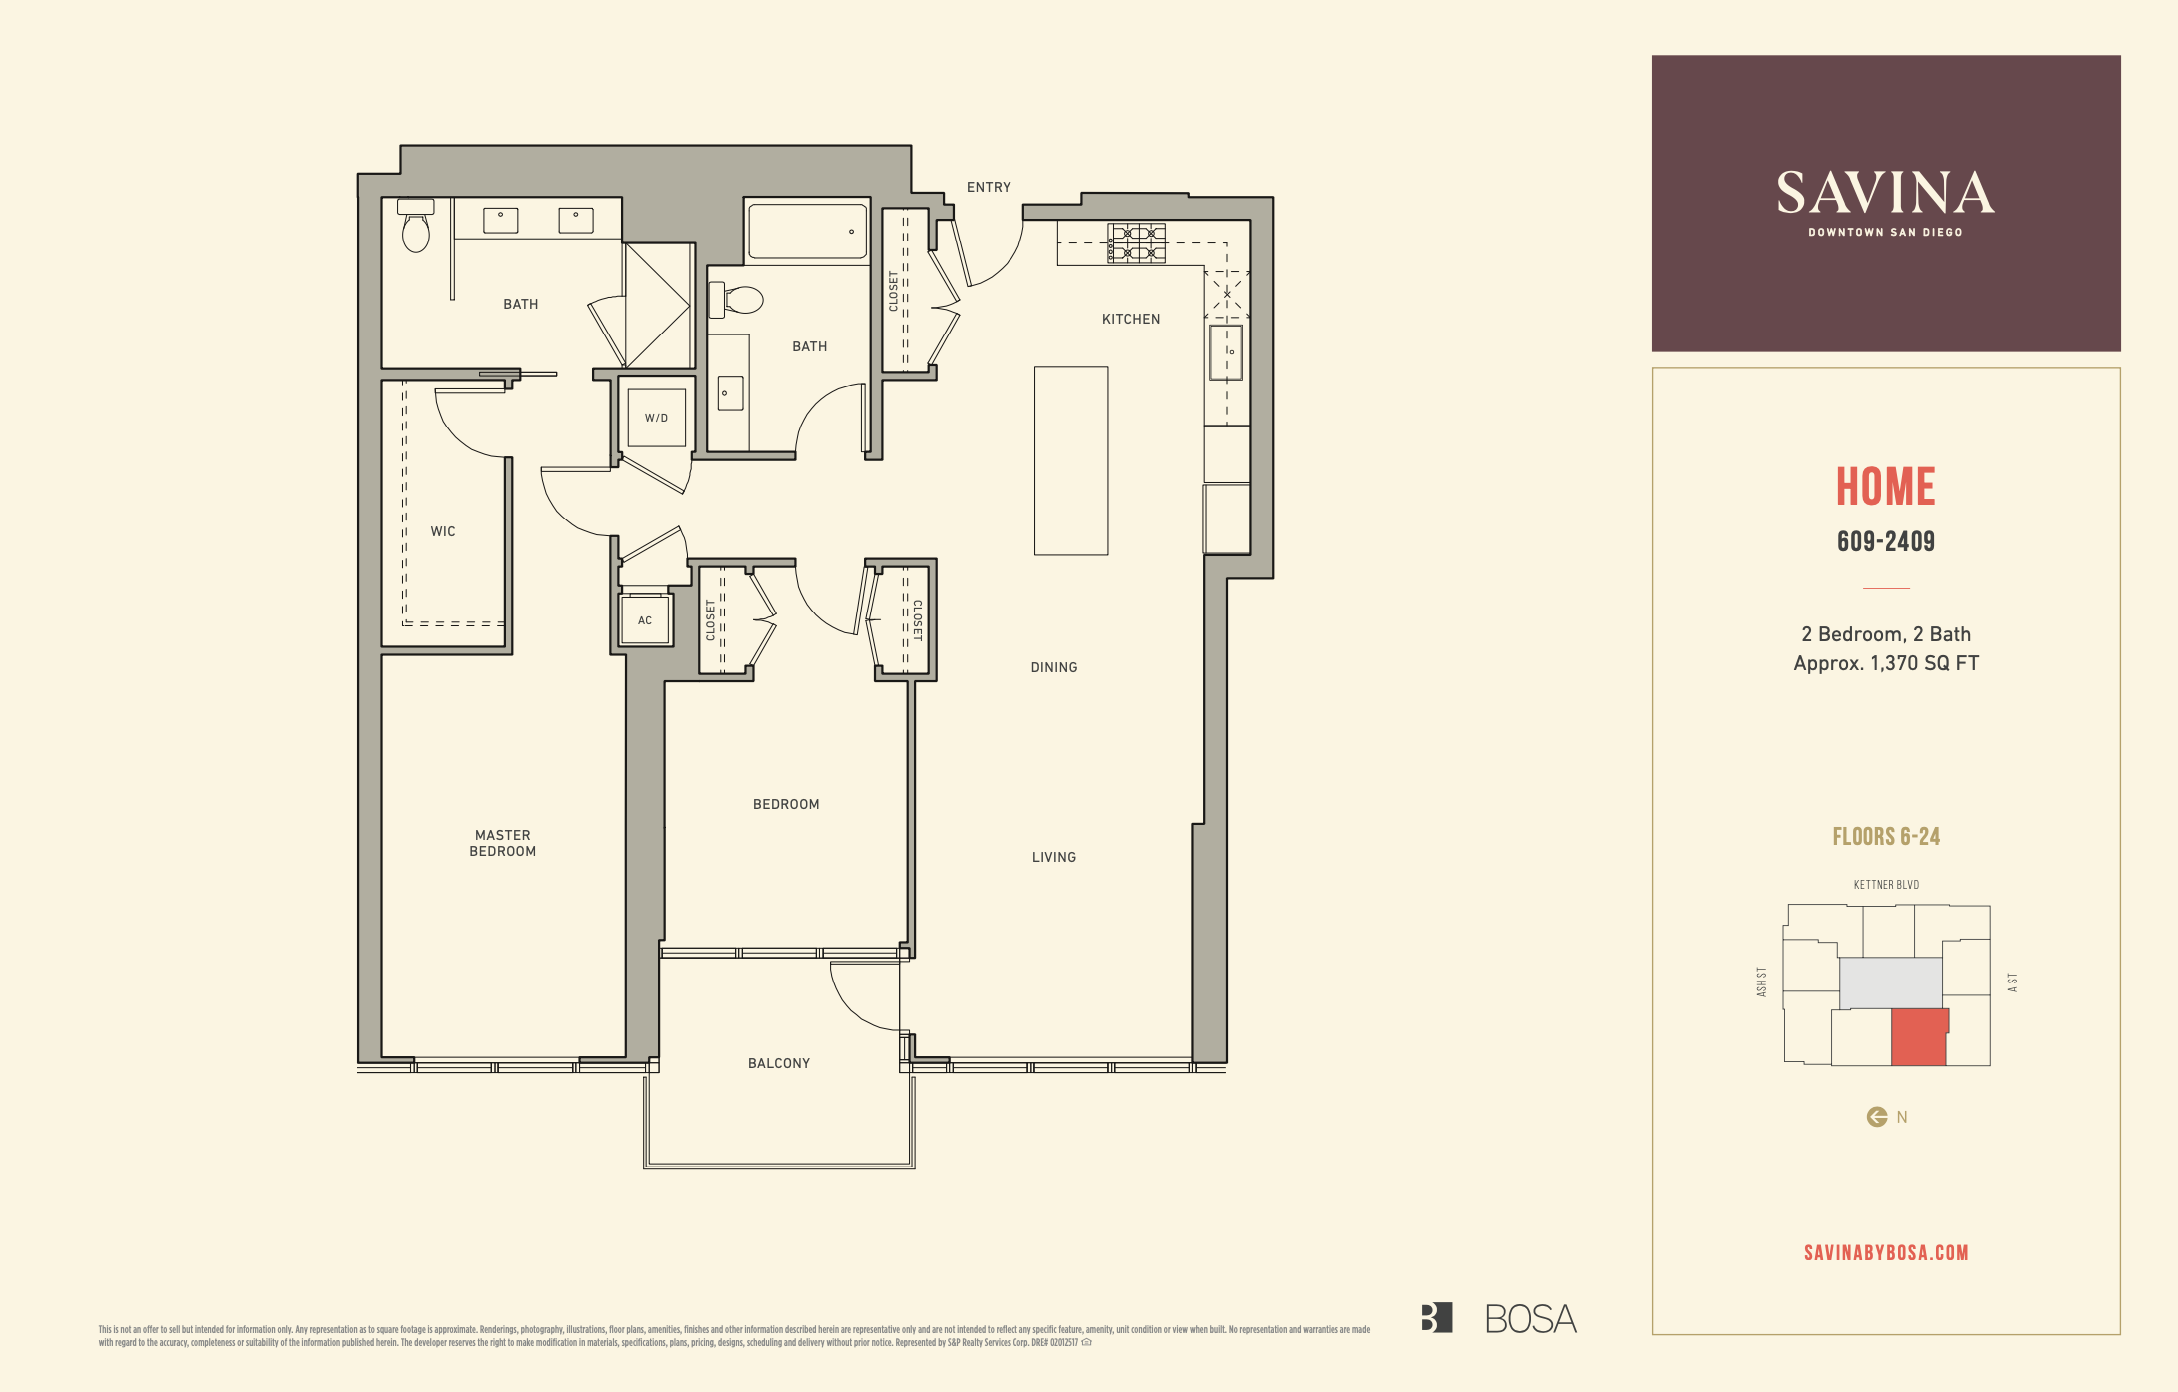 Savina residence 609 thru 2409 floor plan